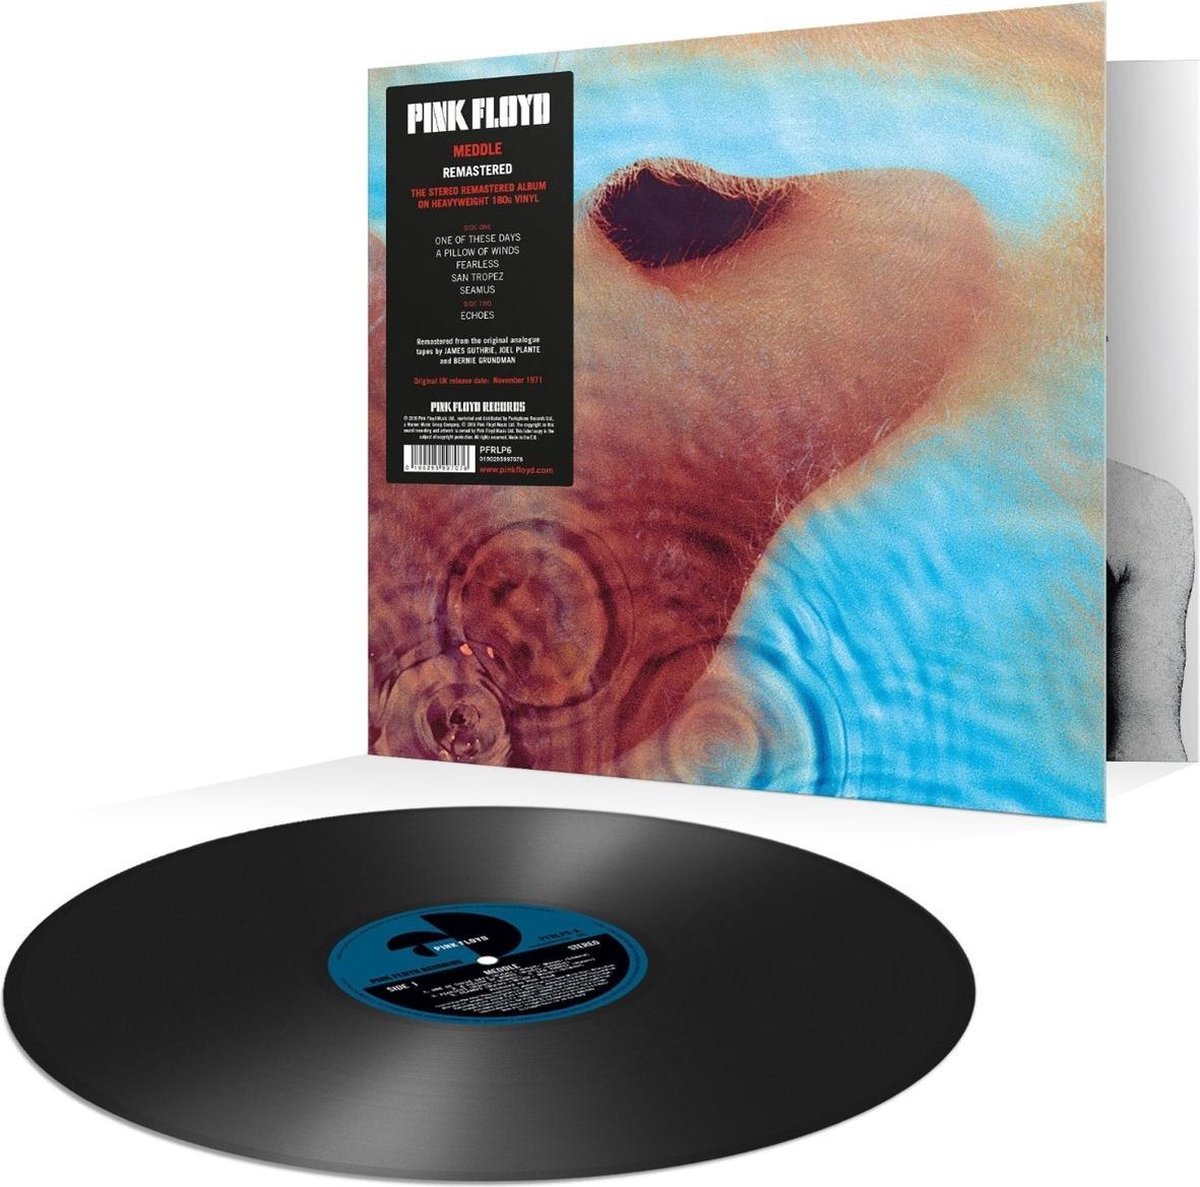 Meddle (LP) - Pink Floyd